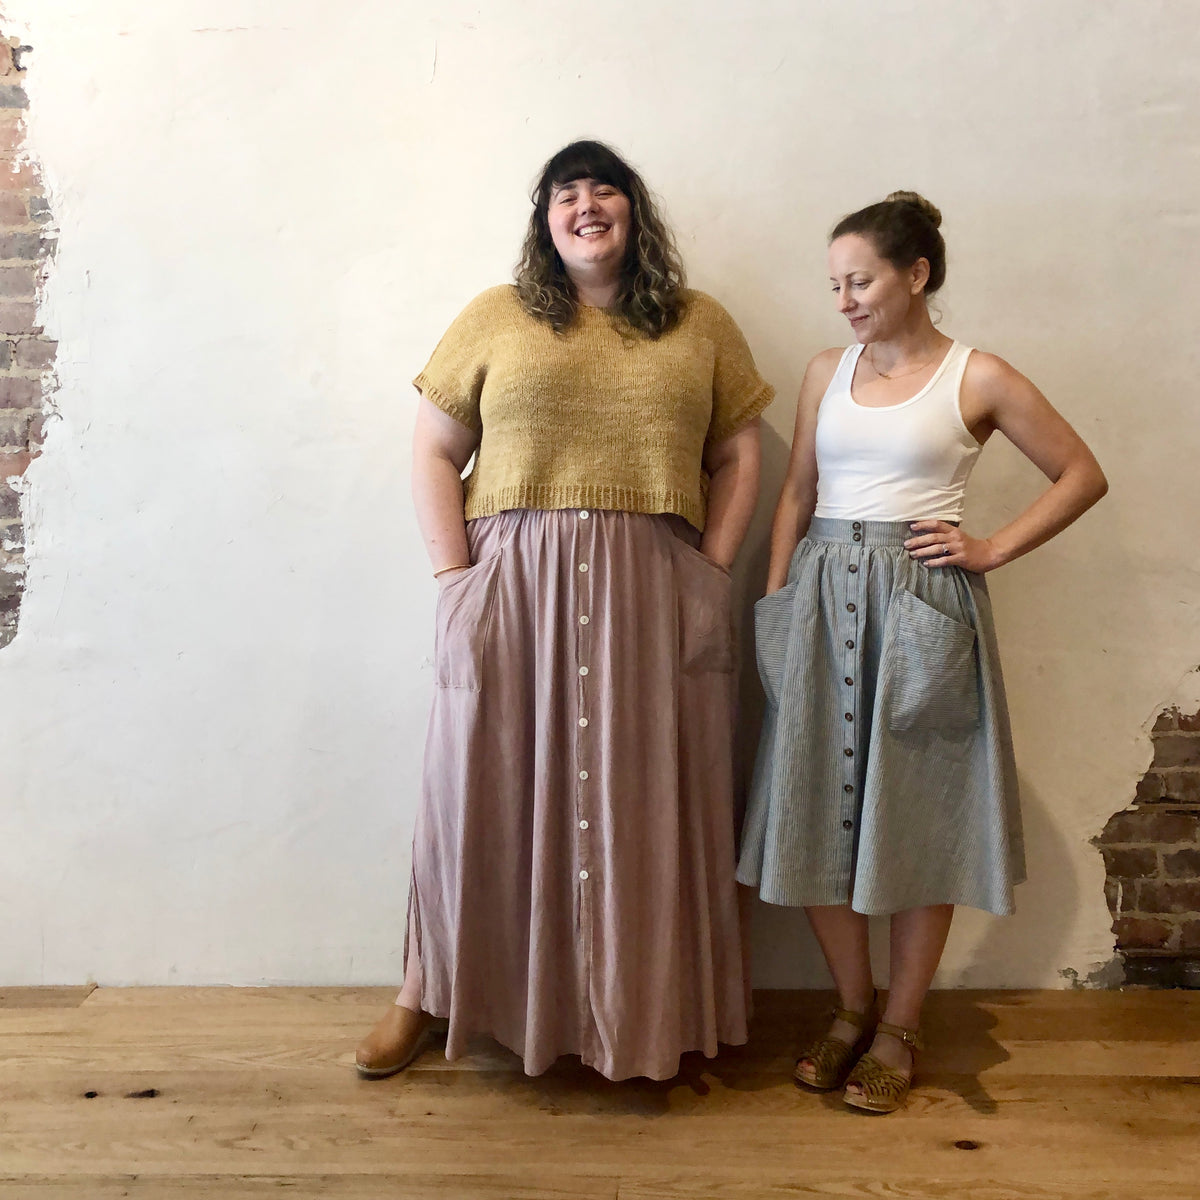 Estuary Skirt by Sew Liberated – EWE fine fiber goods